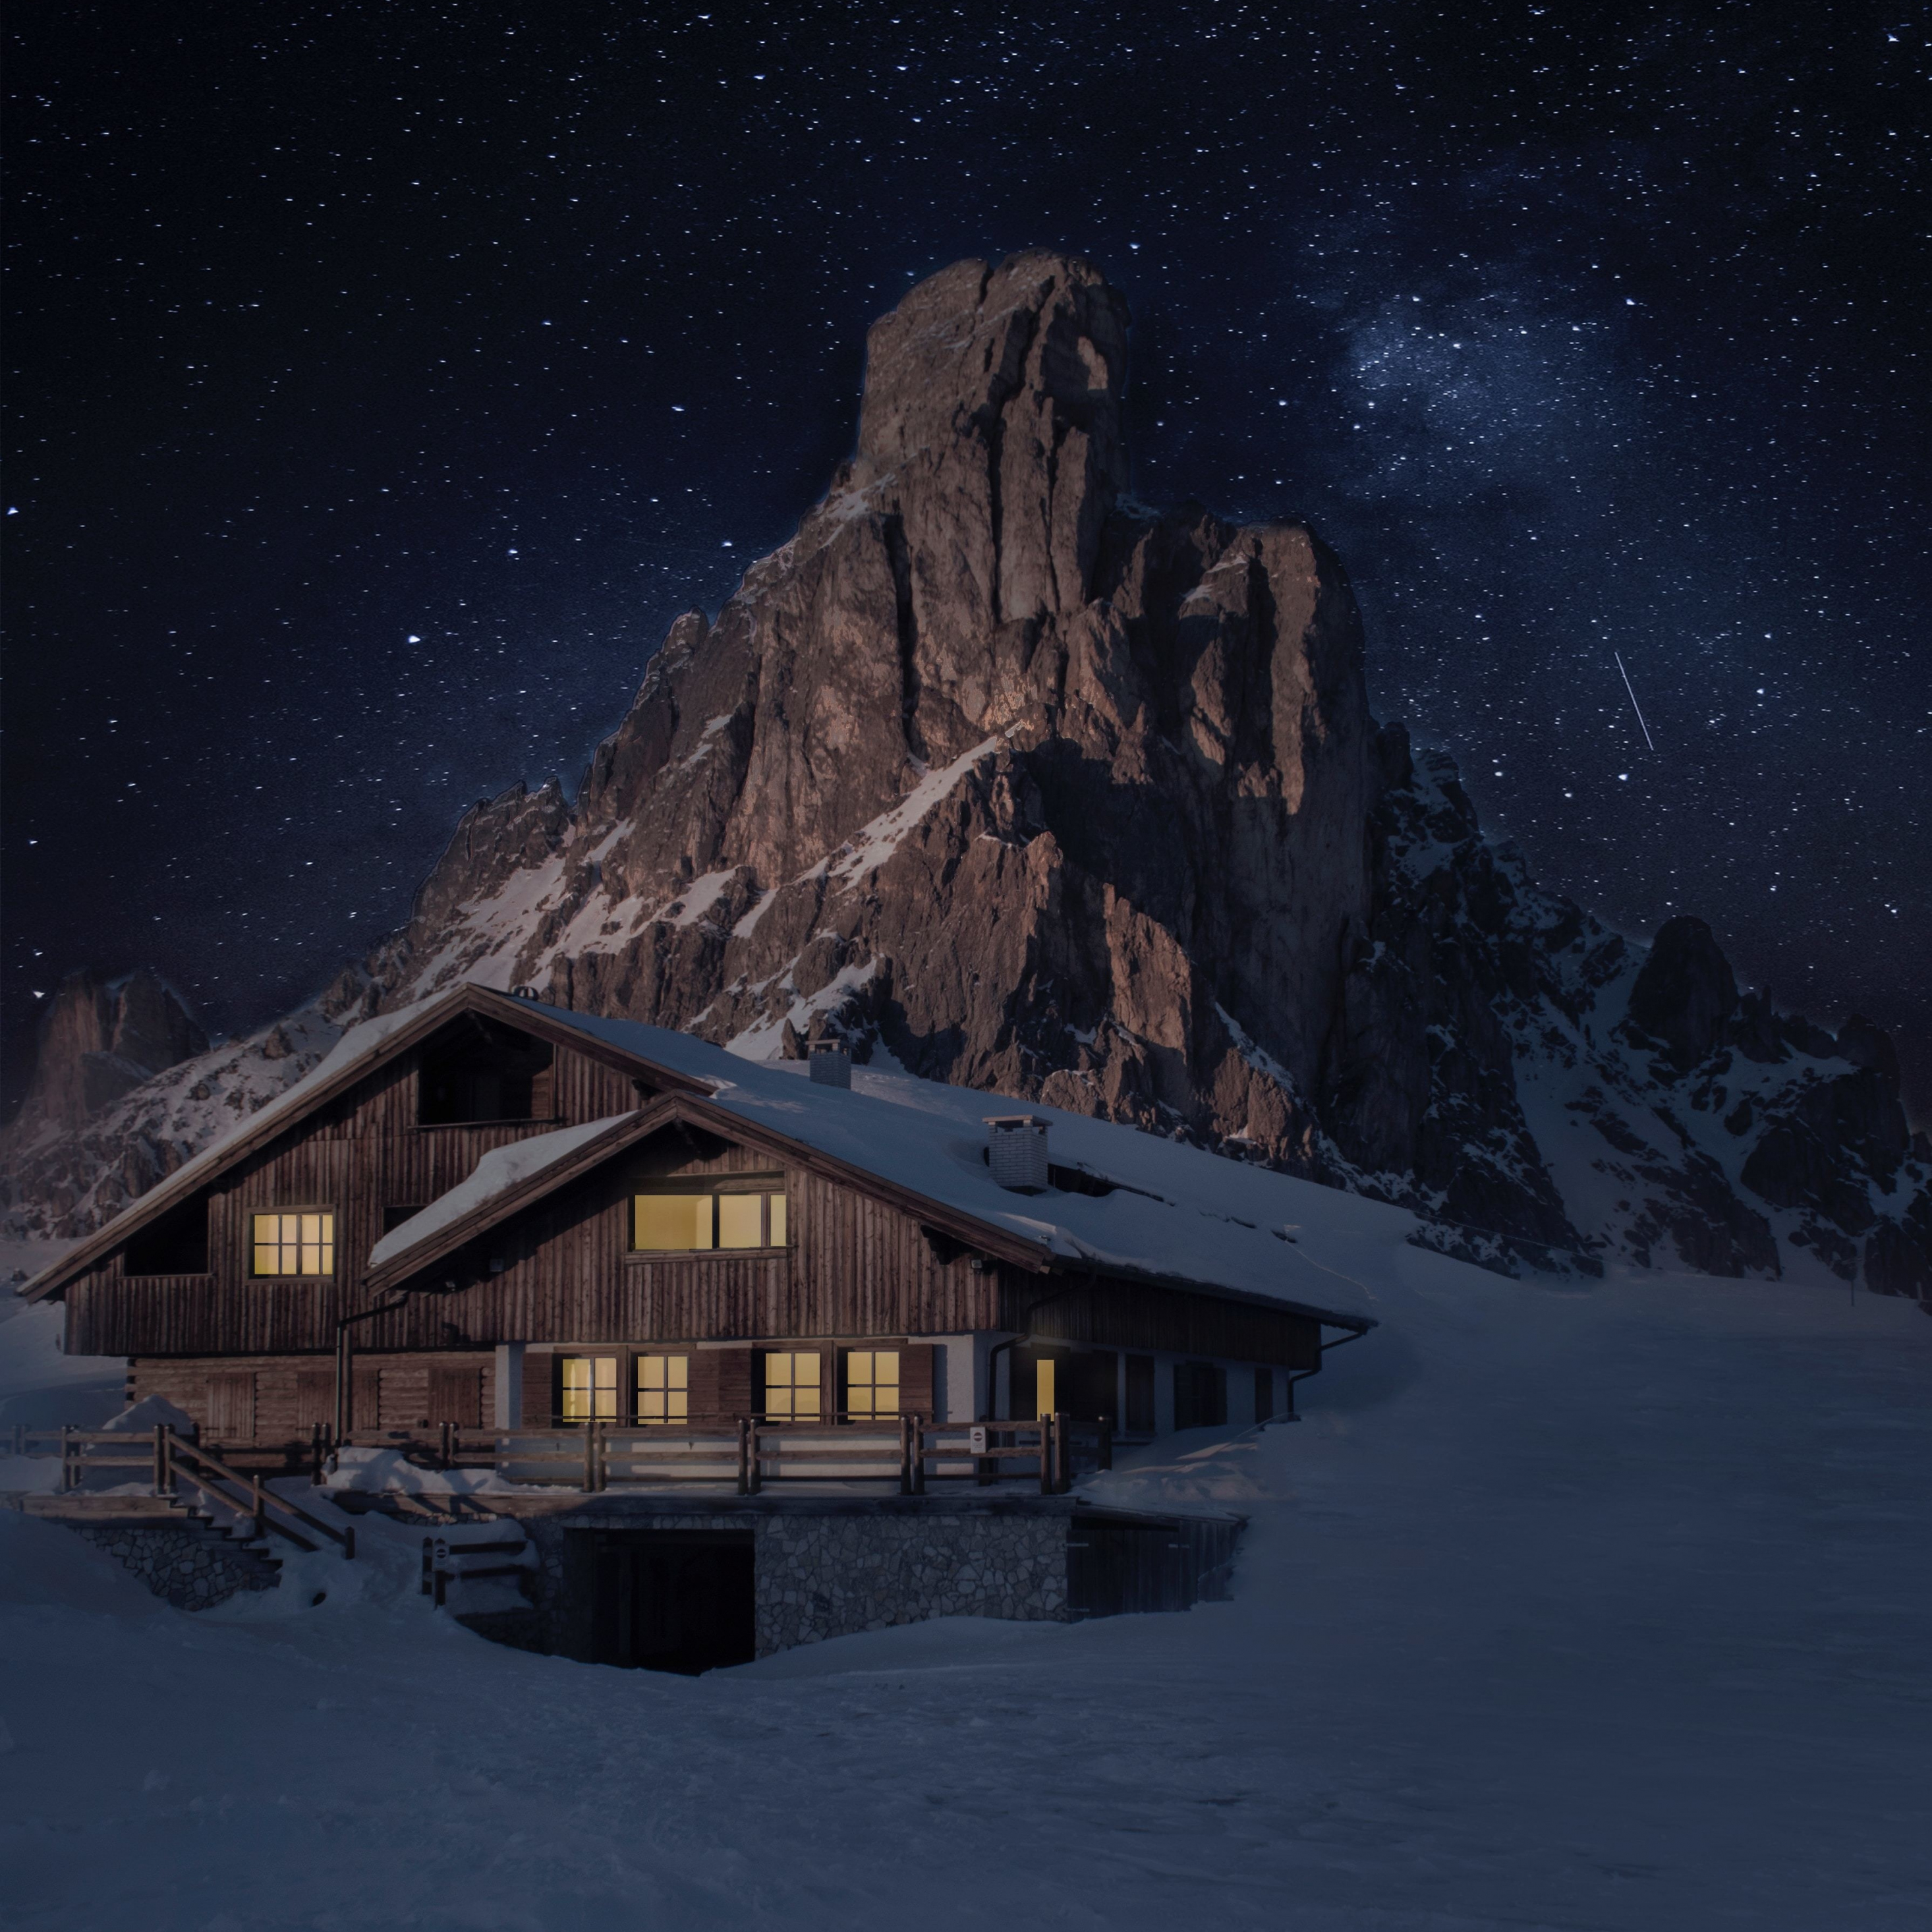 Download 2932x2932 wallpaper house and mountain, night, winter, ipad pro retina, 2932x2932 HD image, background, 23736